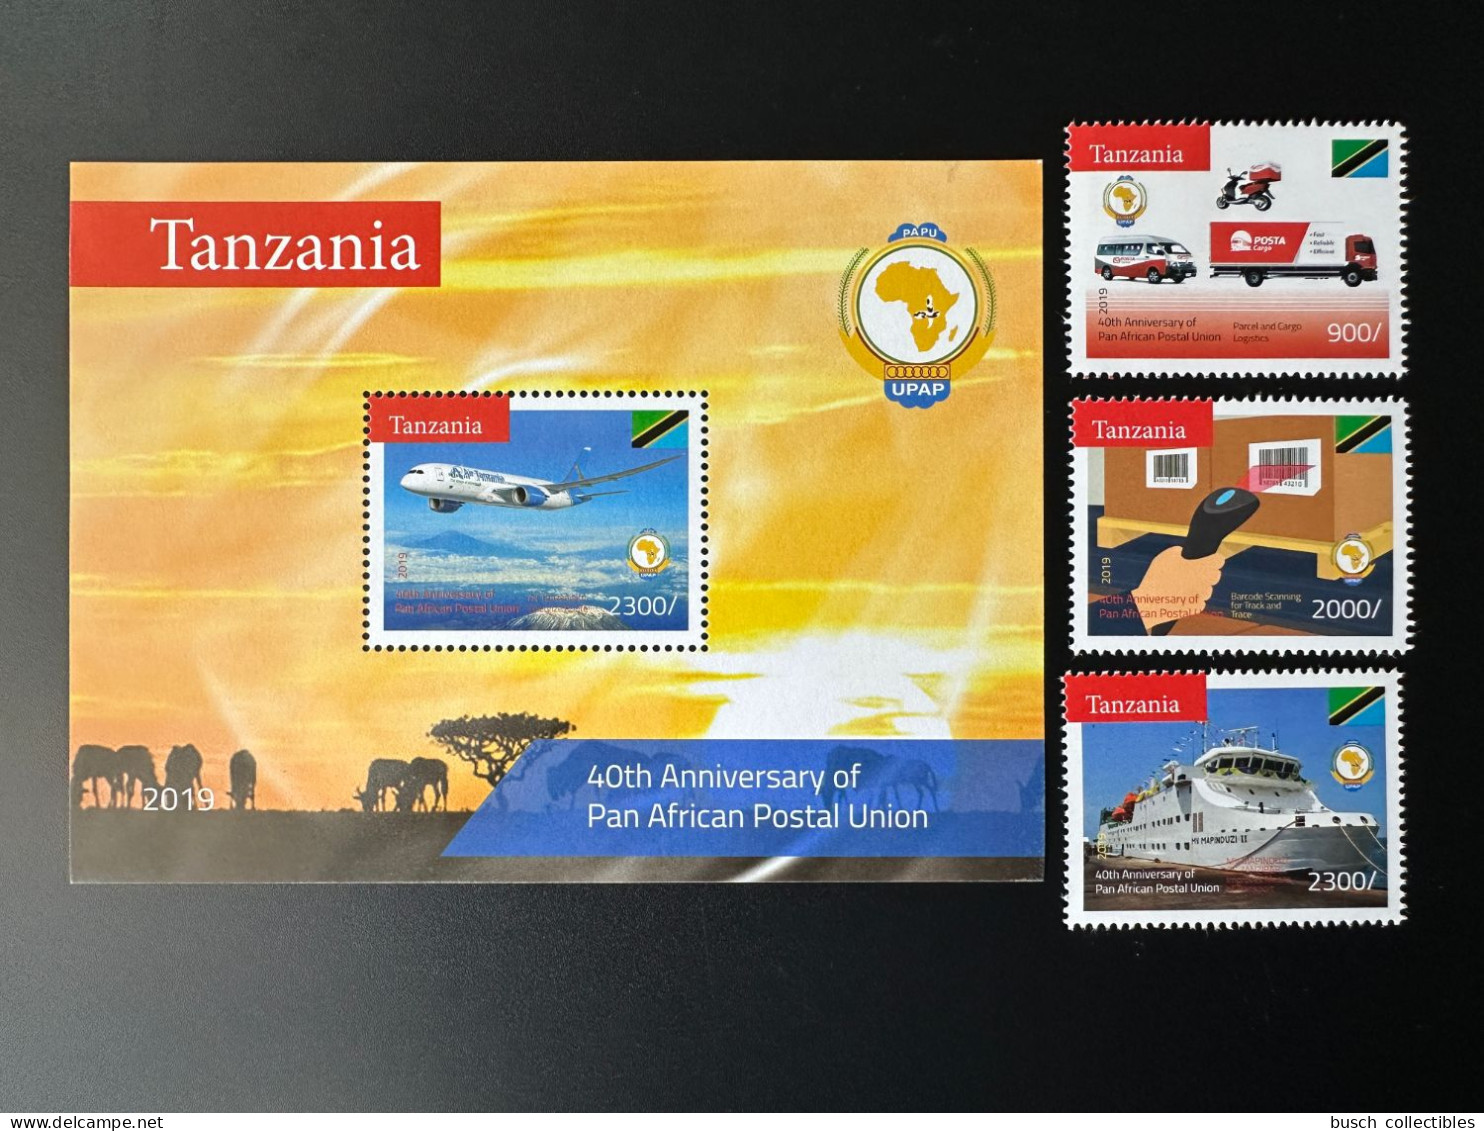 Tanzania Tanzanie Tansania 2019 / 2020 Mi. 5447 - 5449 Bl. 716 PAPU UPAP 40th Anniversary Airplane Flugzeug Avion Ship - Tansania (1964-...)